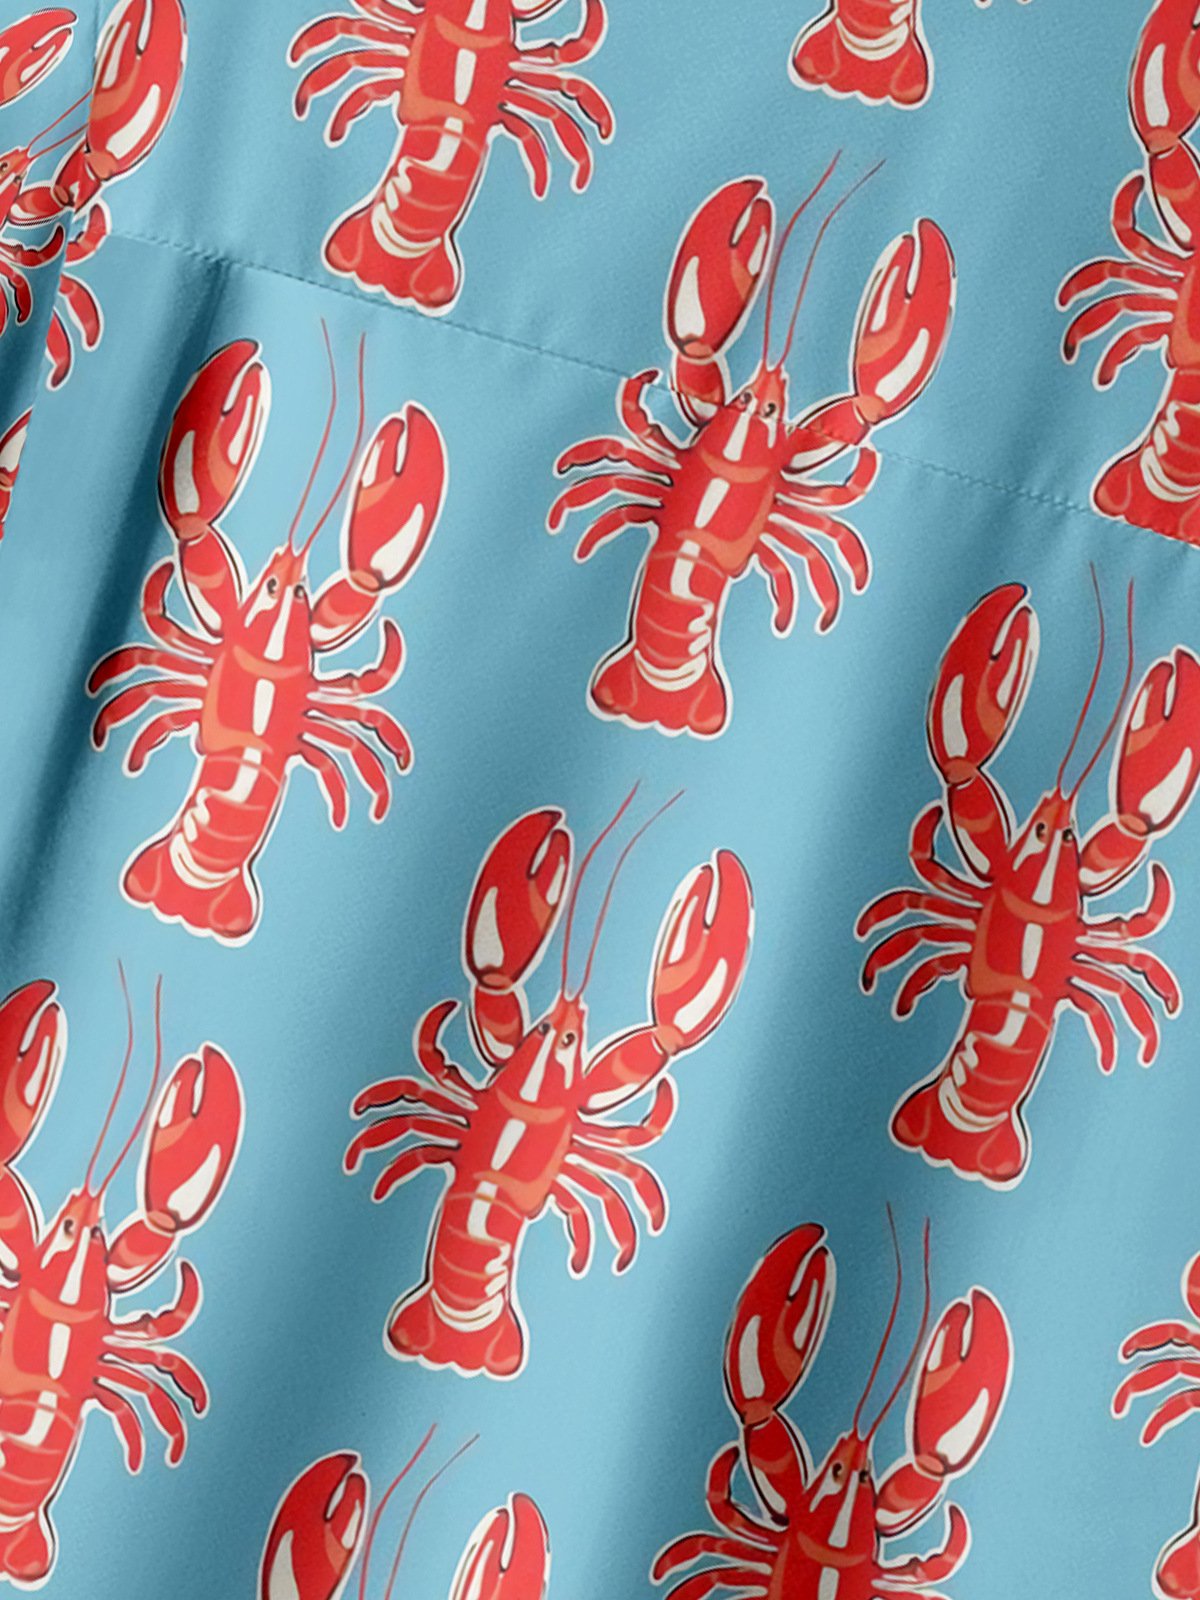 Lobster Chest Pocket Short Sleeve Hawaiian Shirt